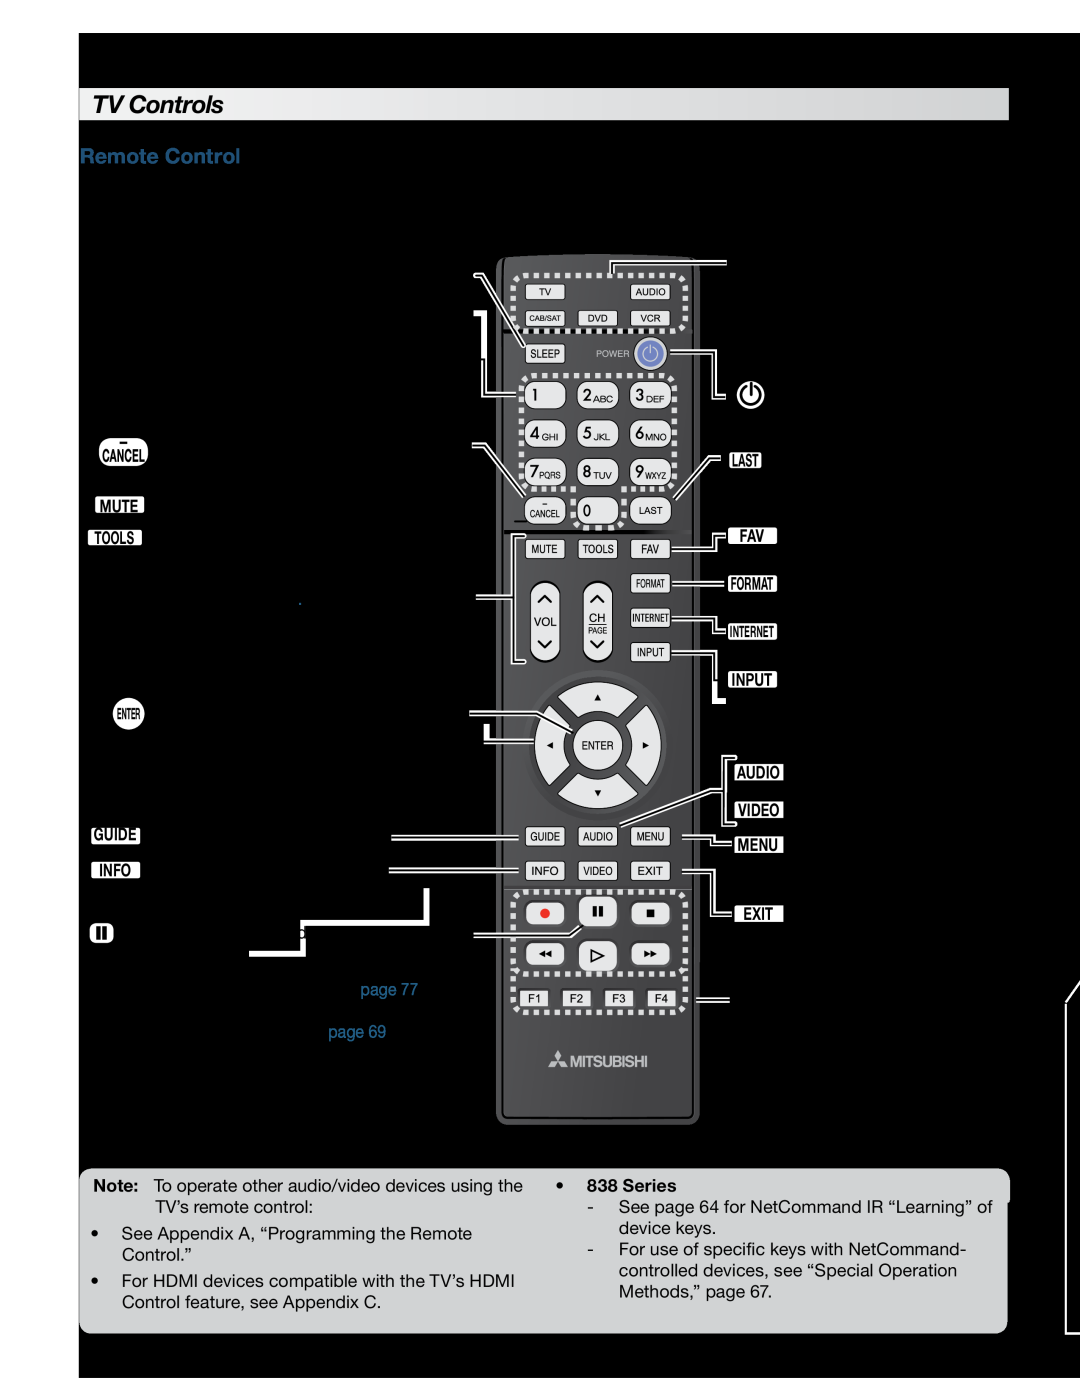 Mitsubishi Electronics 838 SERIES TV Controls, Remote Control, Basic Setup and Operation, Tv Cab/Sat Dvd Audio Vcr, Mute 